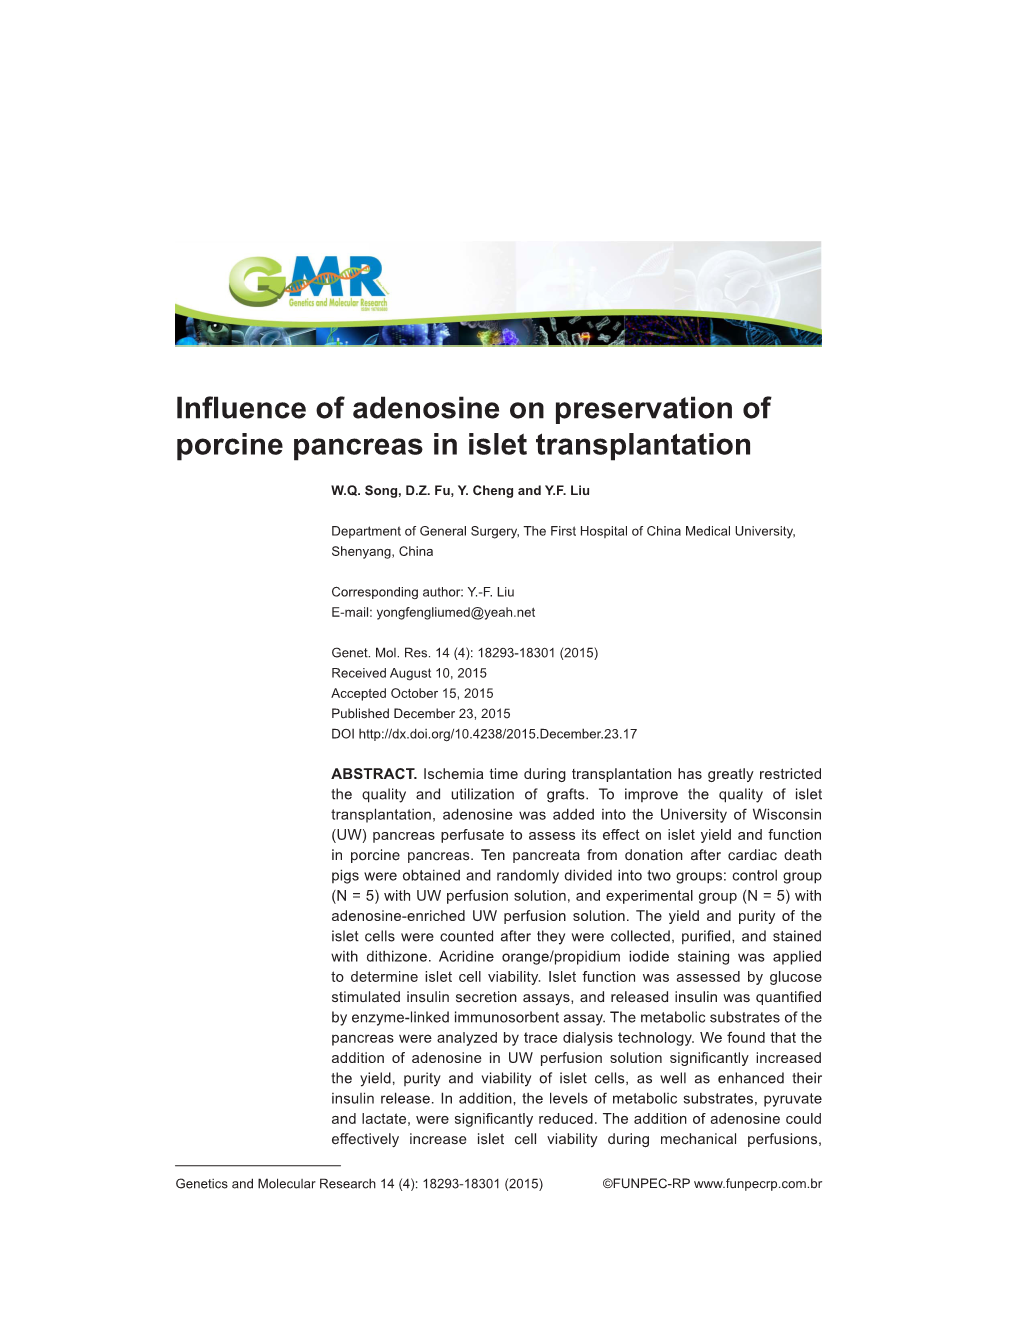 Influence of Adenosine on Preservation of Porcine Pancreas in Islet Transplantation